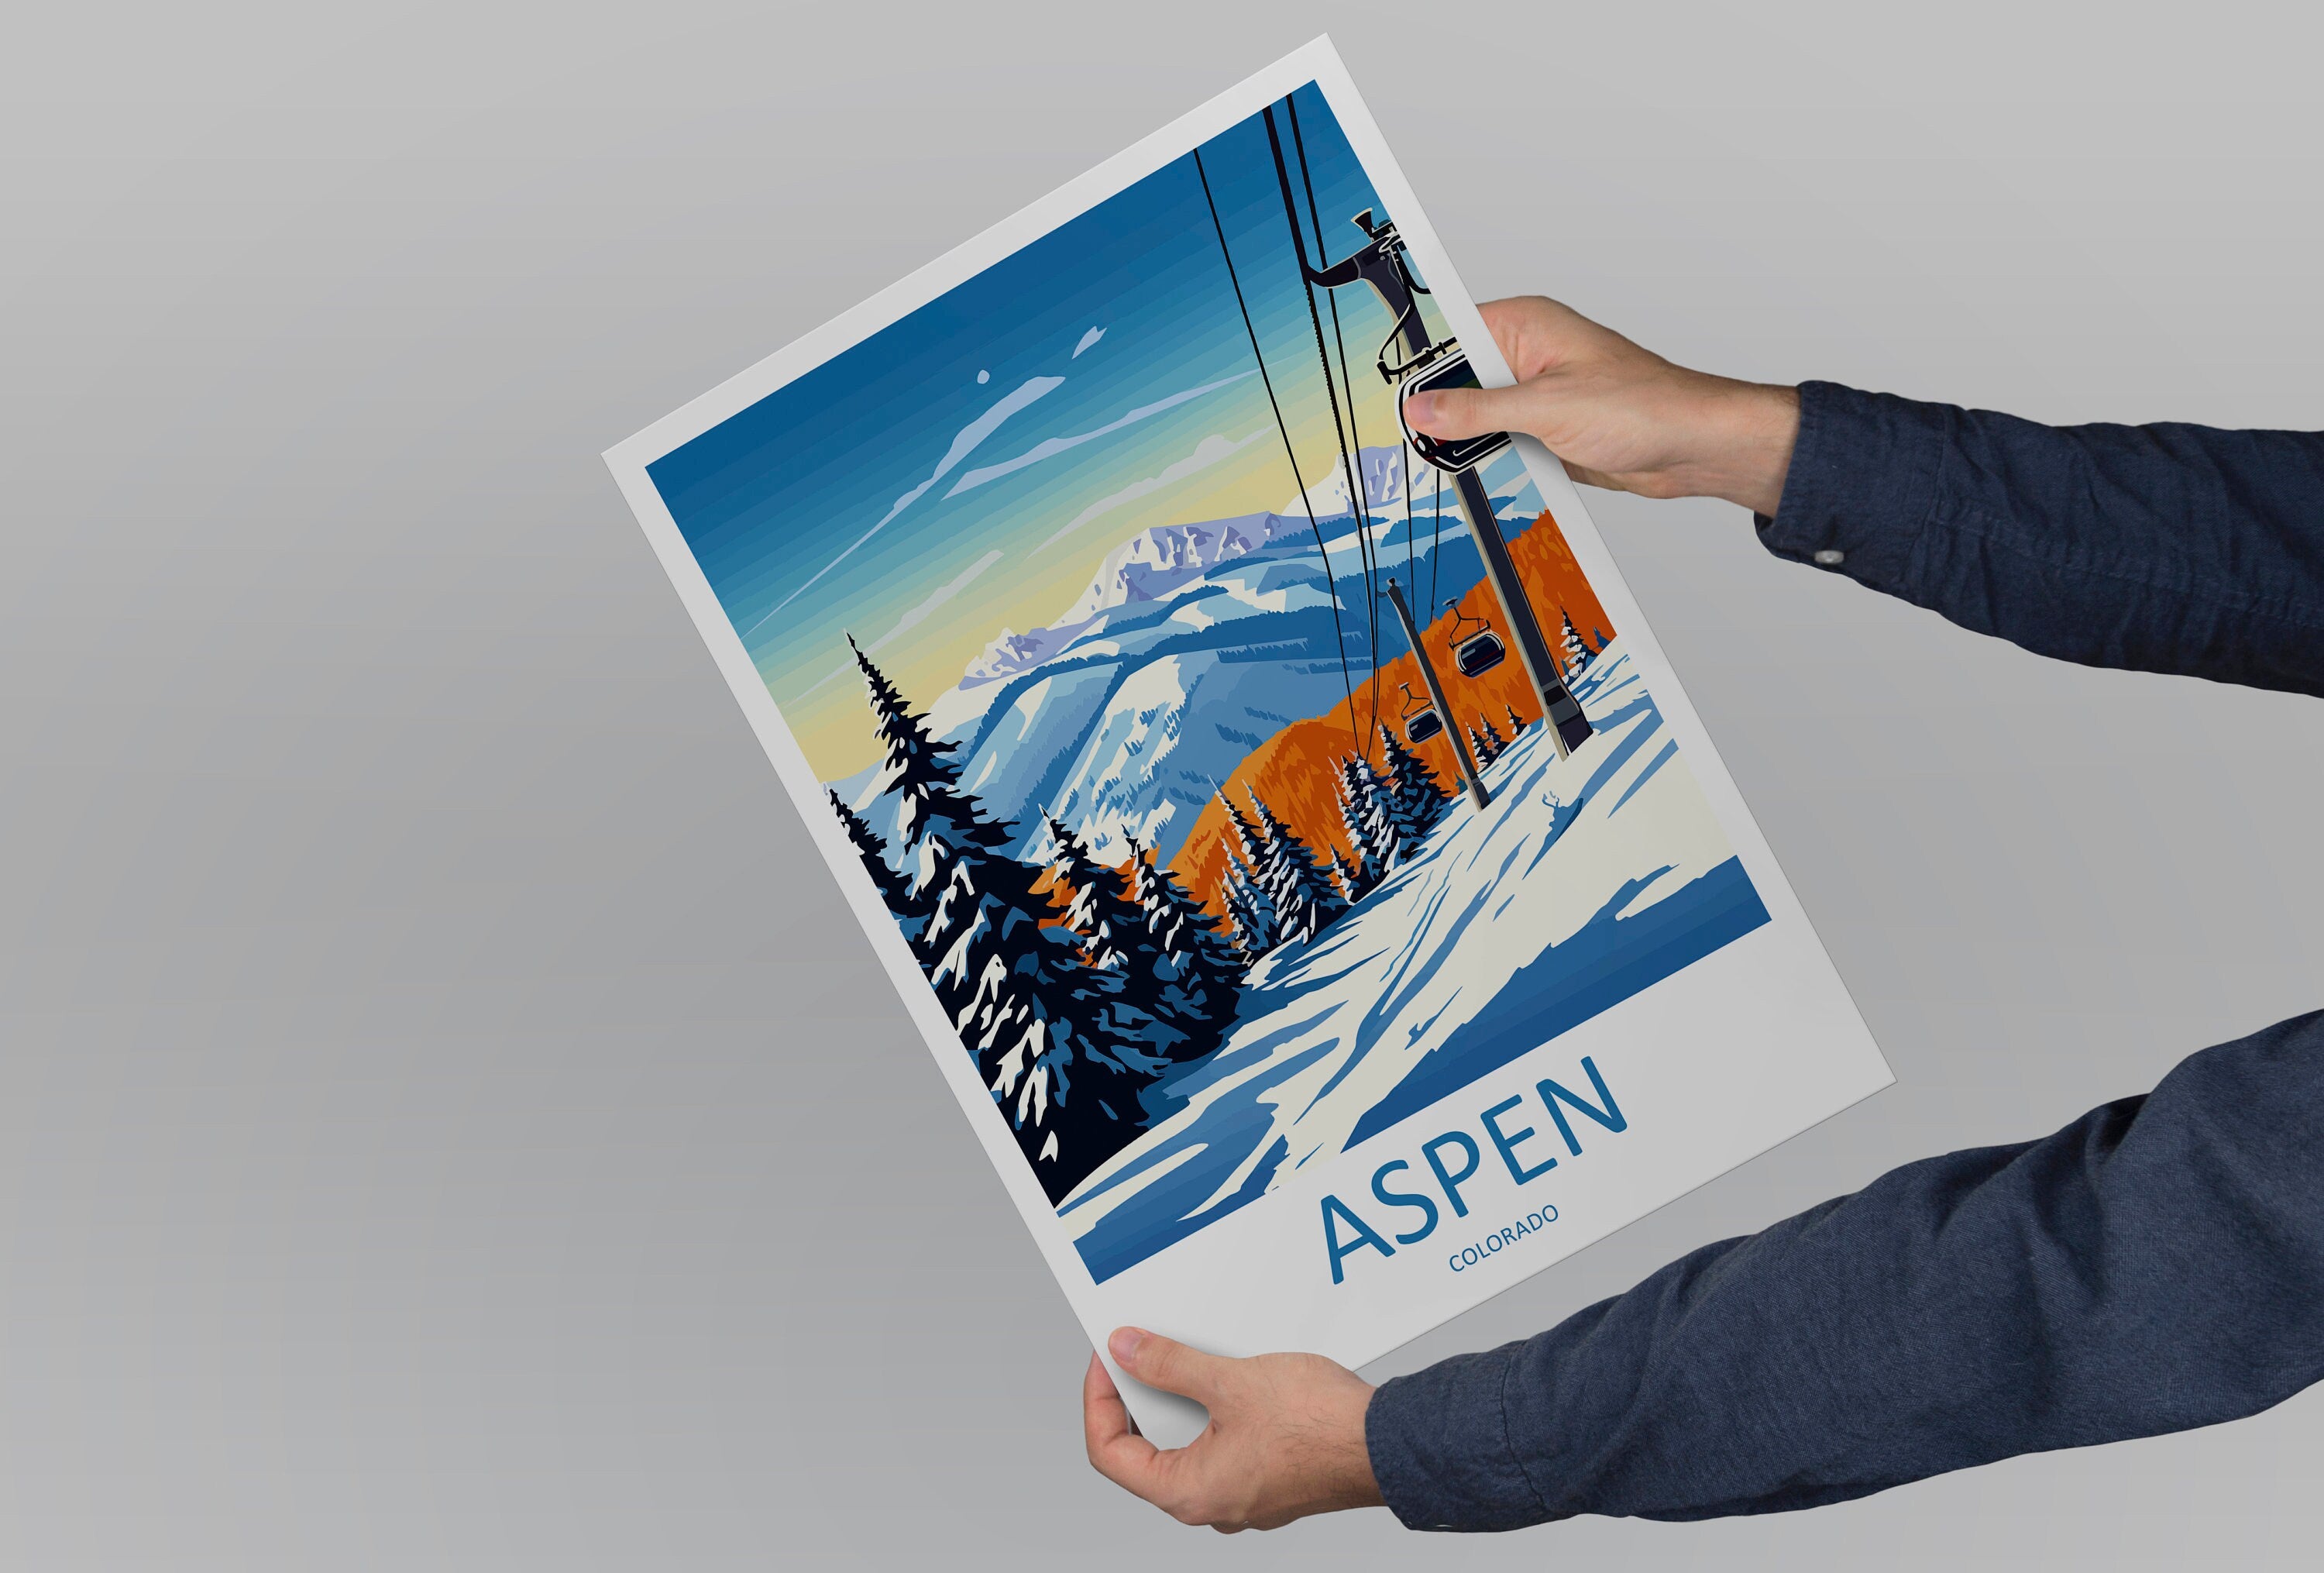 Aspen Travel Print Wall Art Aspen Wall Hanging Home Décor Aspen Gift Art Lovers Ski Art Lover Gift Aspen Print Skiing Aspen Ski Art Poster